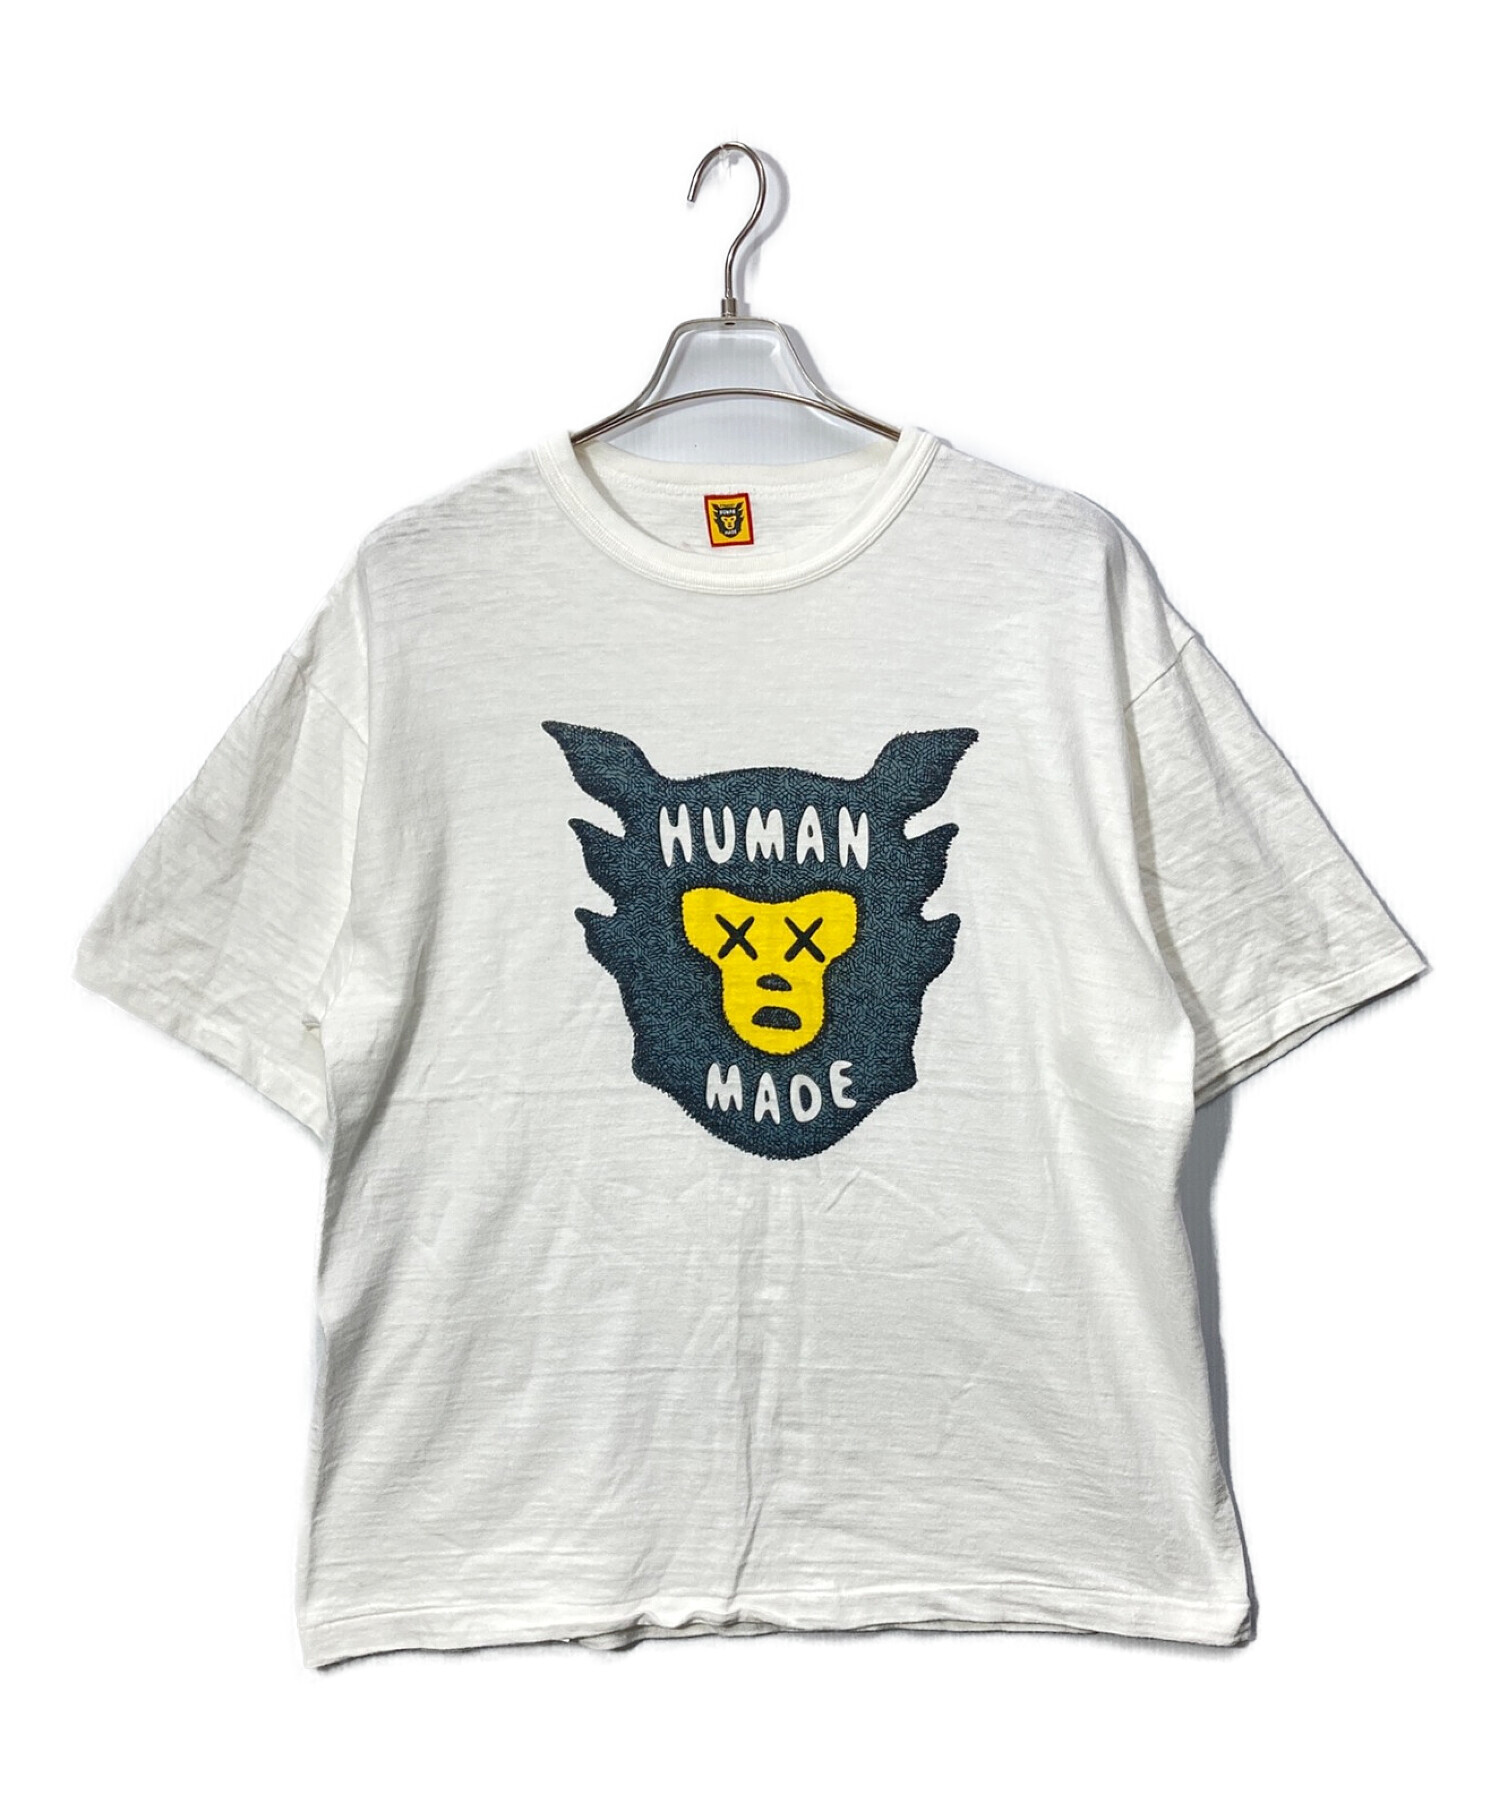 HUMANMADE T-SHIRT KAWS #1 - WHITE 2XL